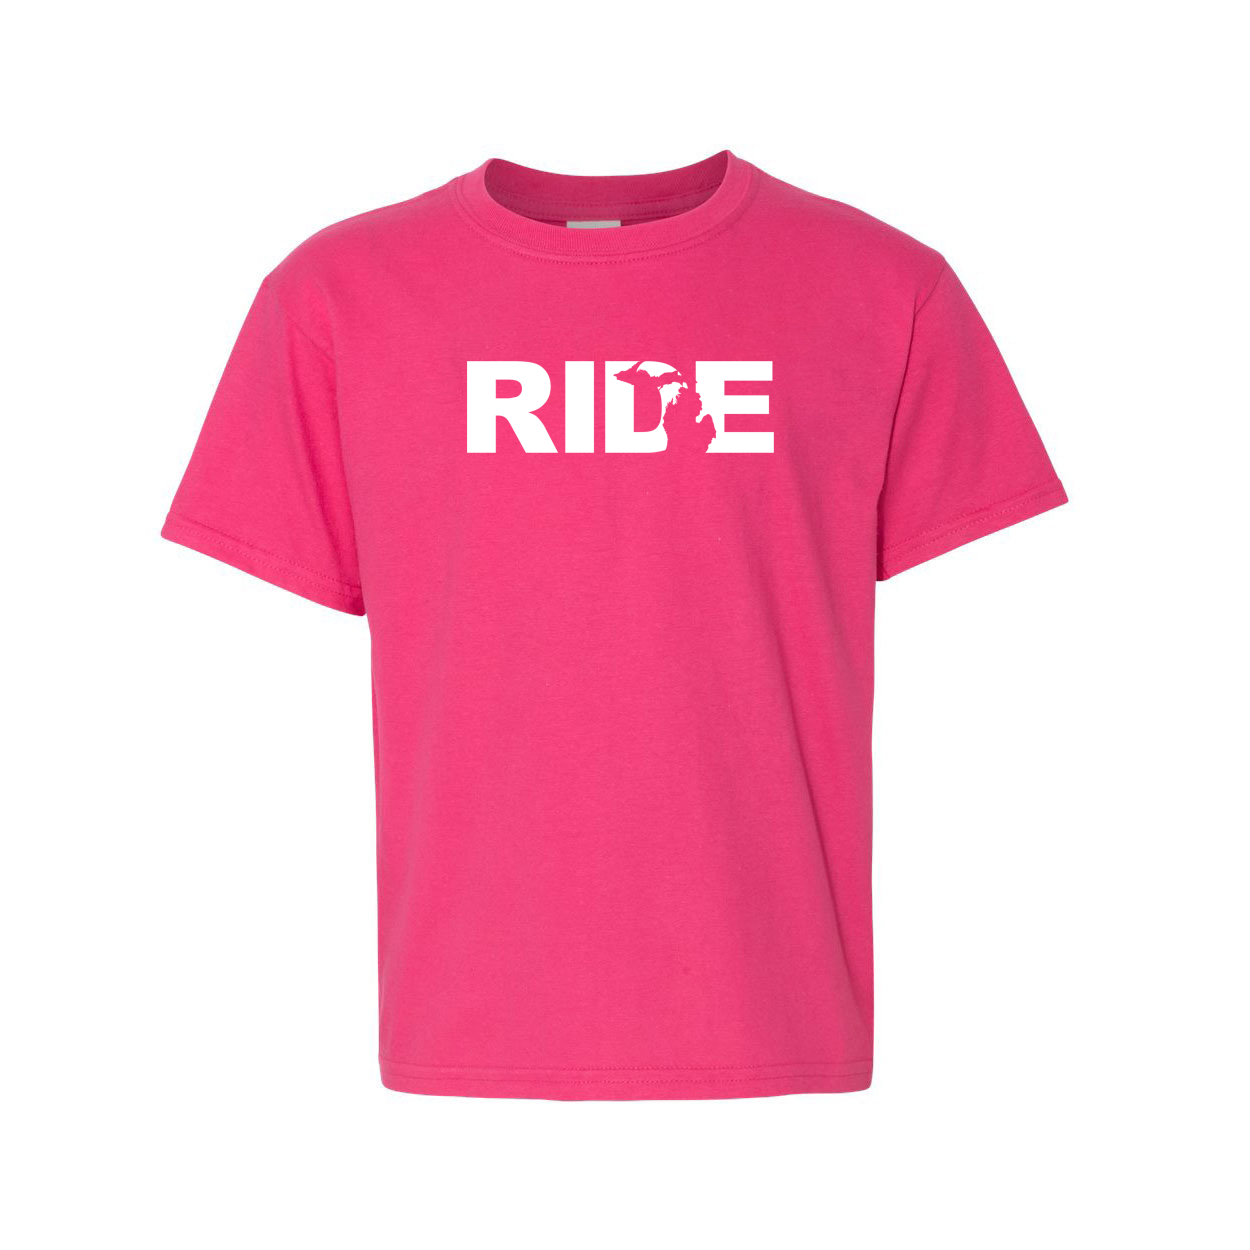 Ride Michigan Classic Youth T-Shirt Pink